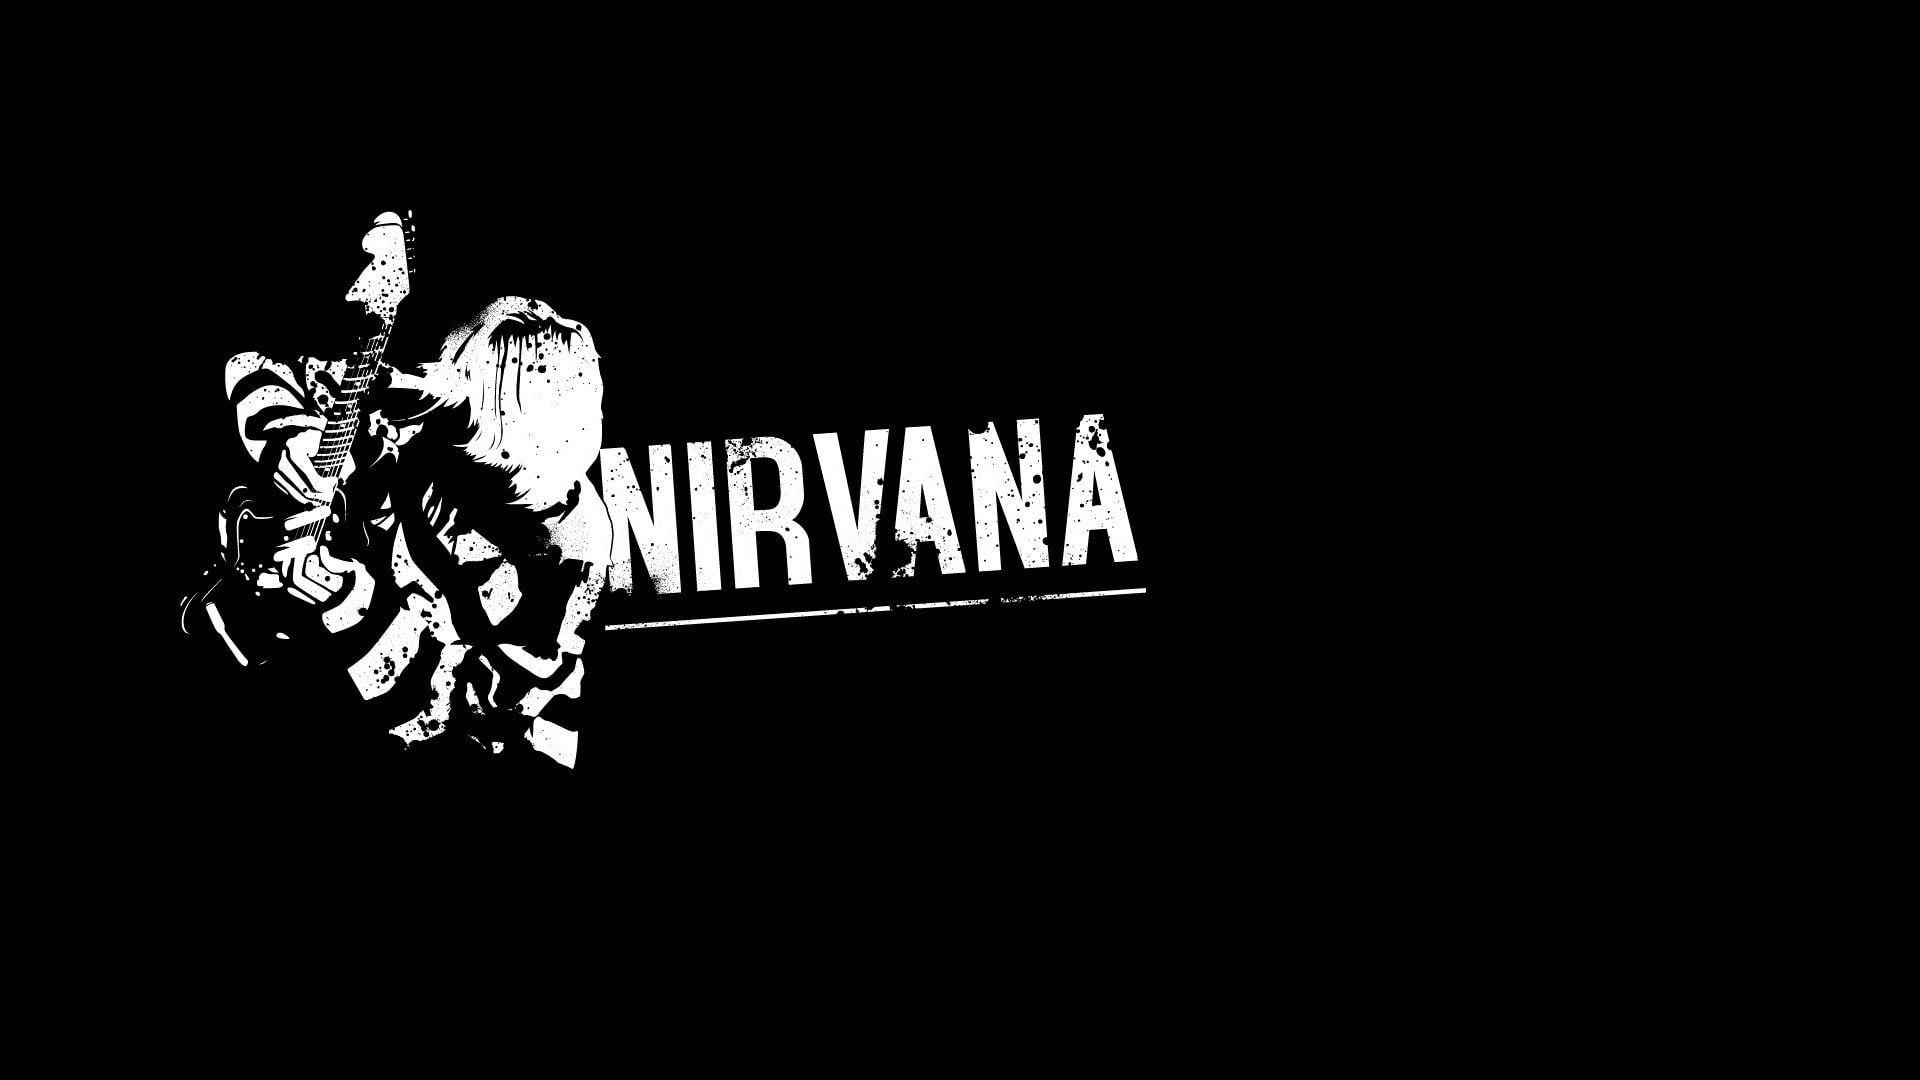 Band (Music), Nirvana, text, communication, western script